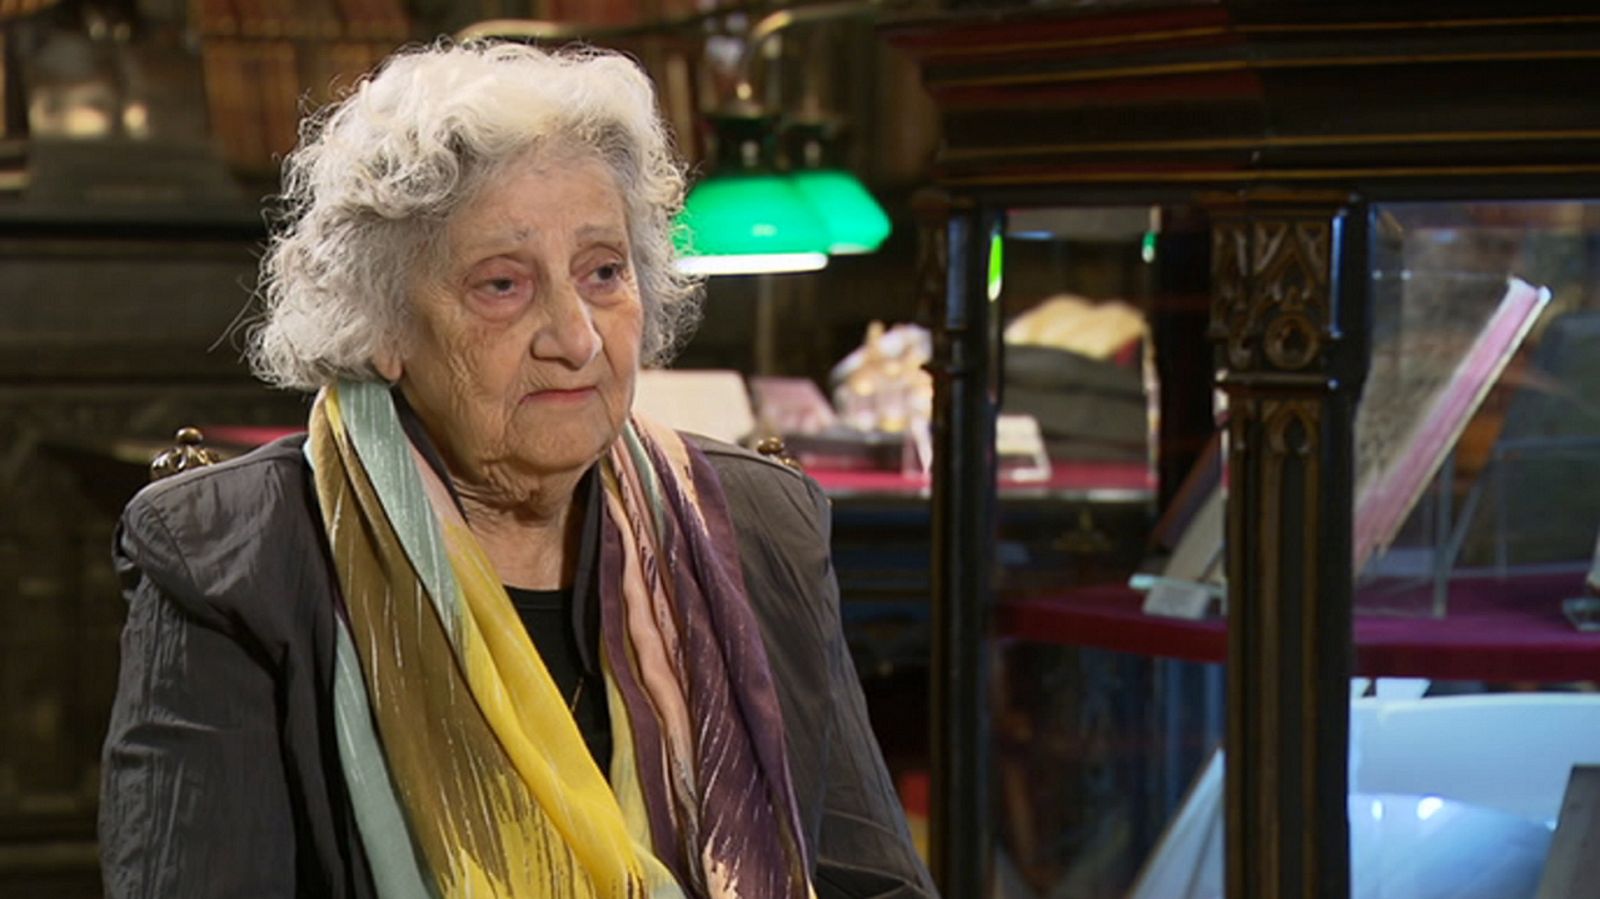 Shalom - Anette Cabelli, sefardita en el holocausto - RTVE.es